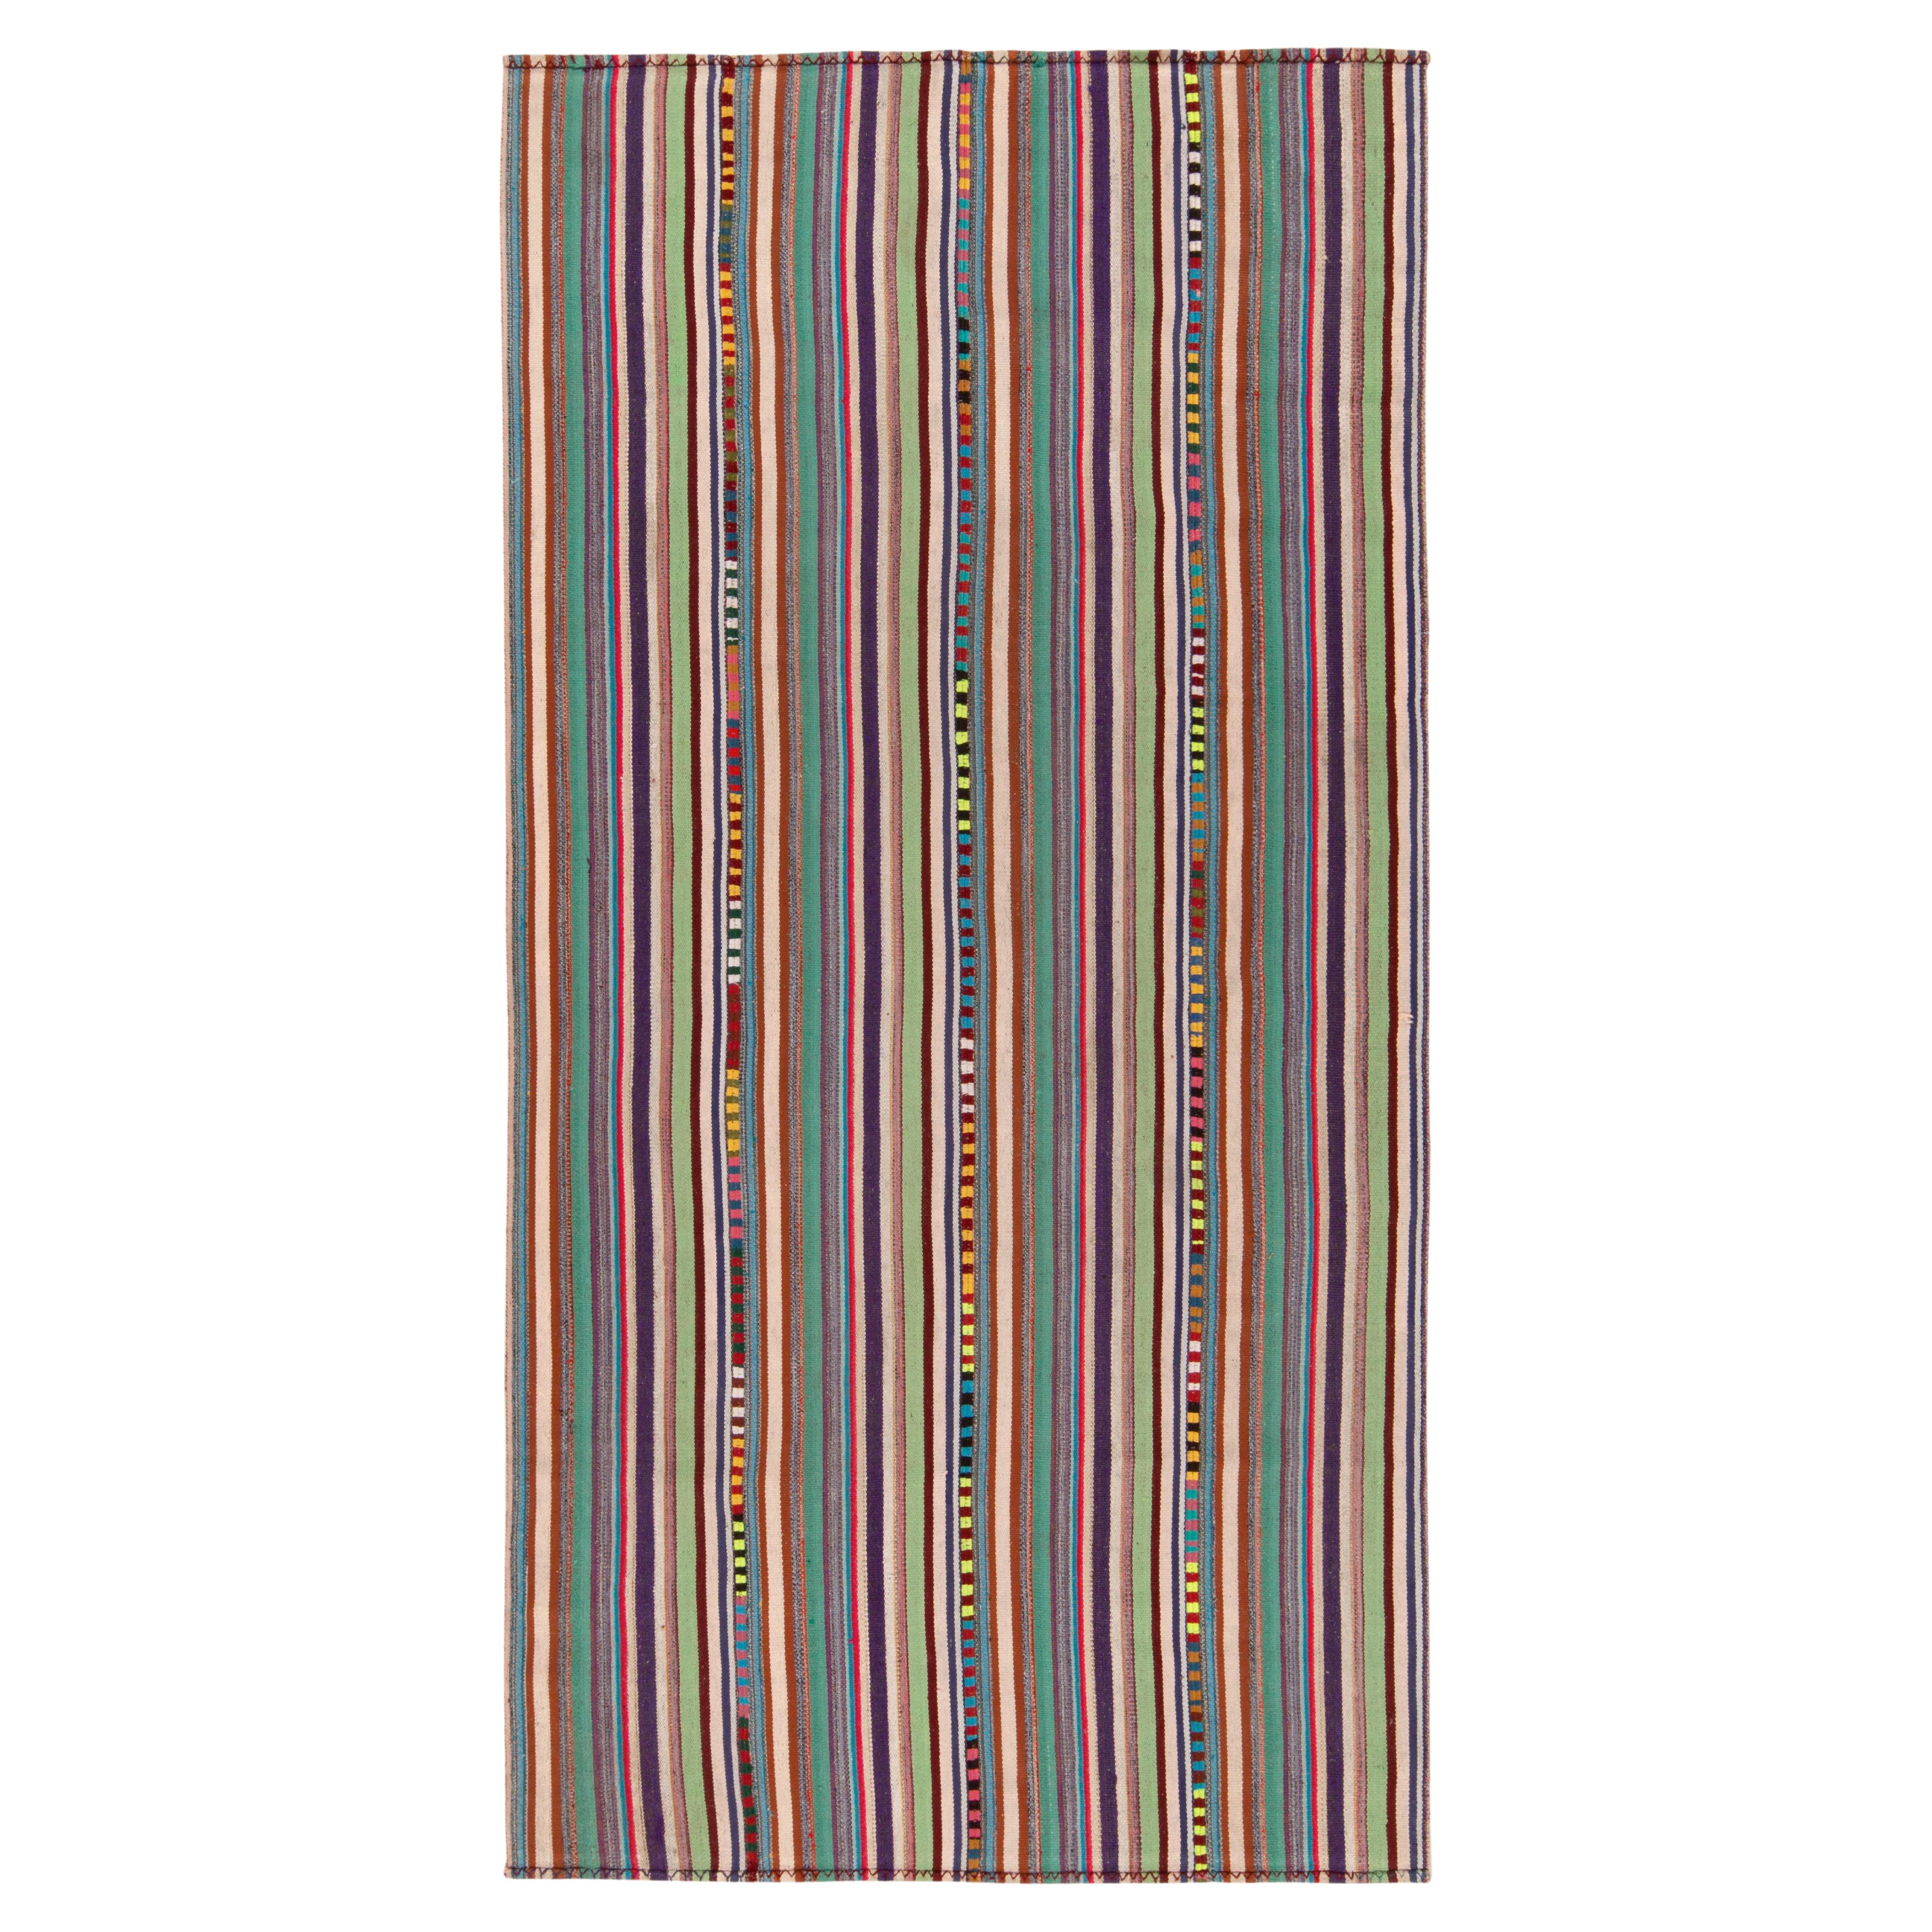 1950s Vintage Kilim Rug in Seafoam, Multicolor Stripe Patterns by Rug & Kilim